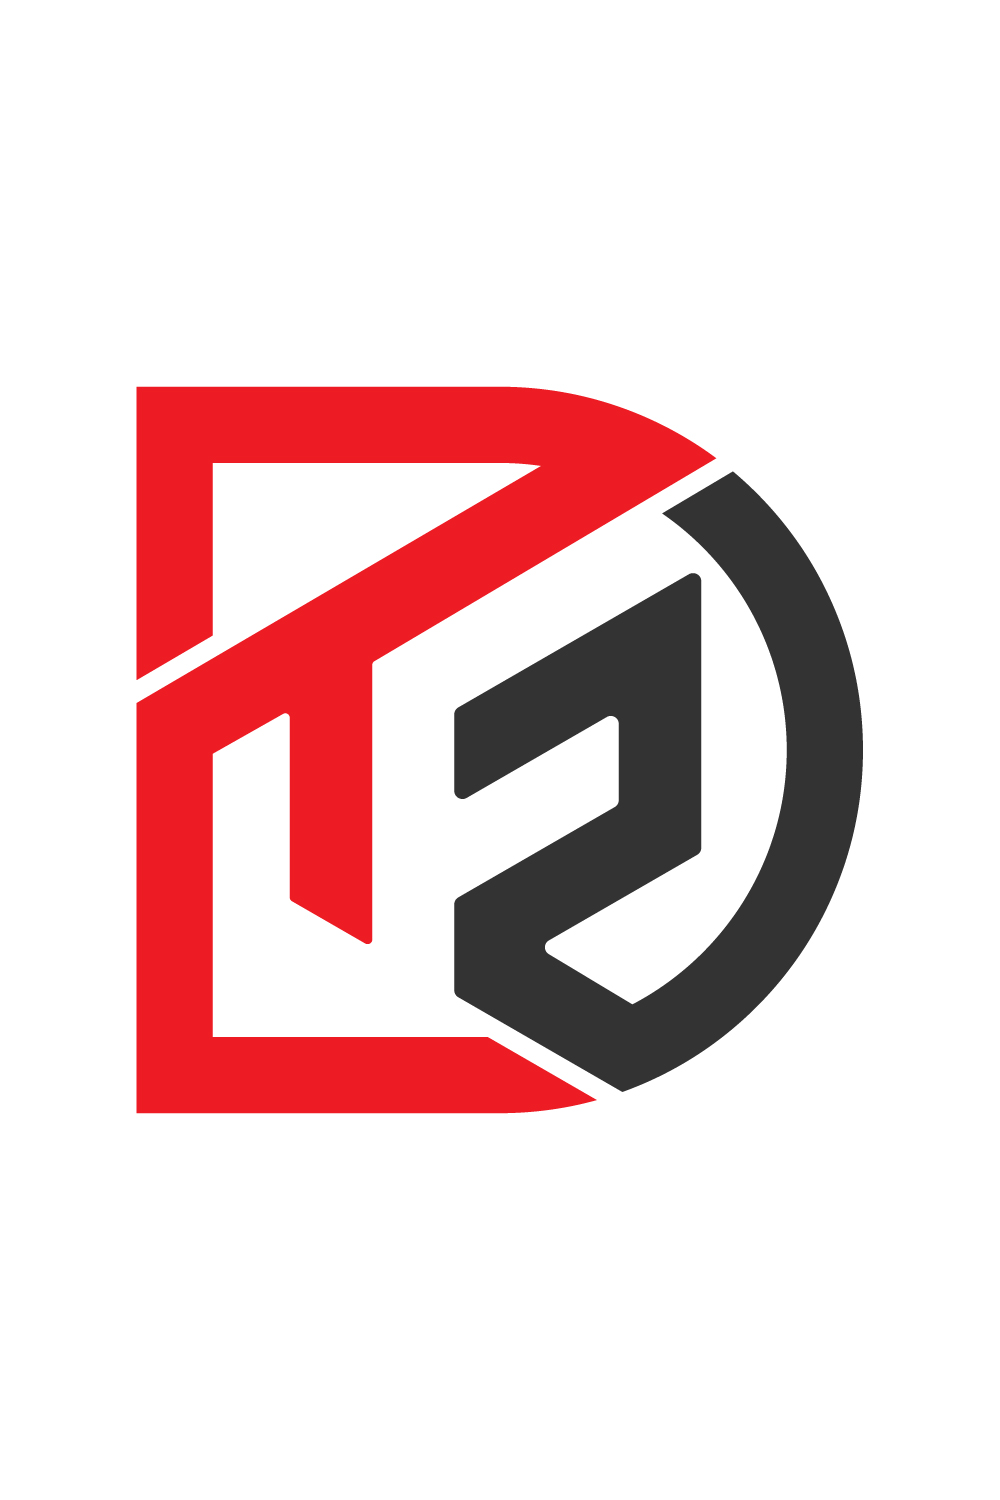 DTR Logo design pinterest preview image.